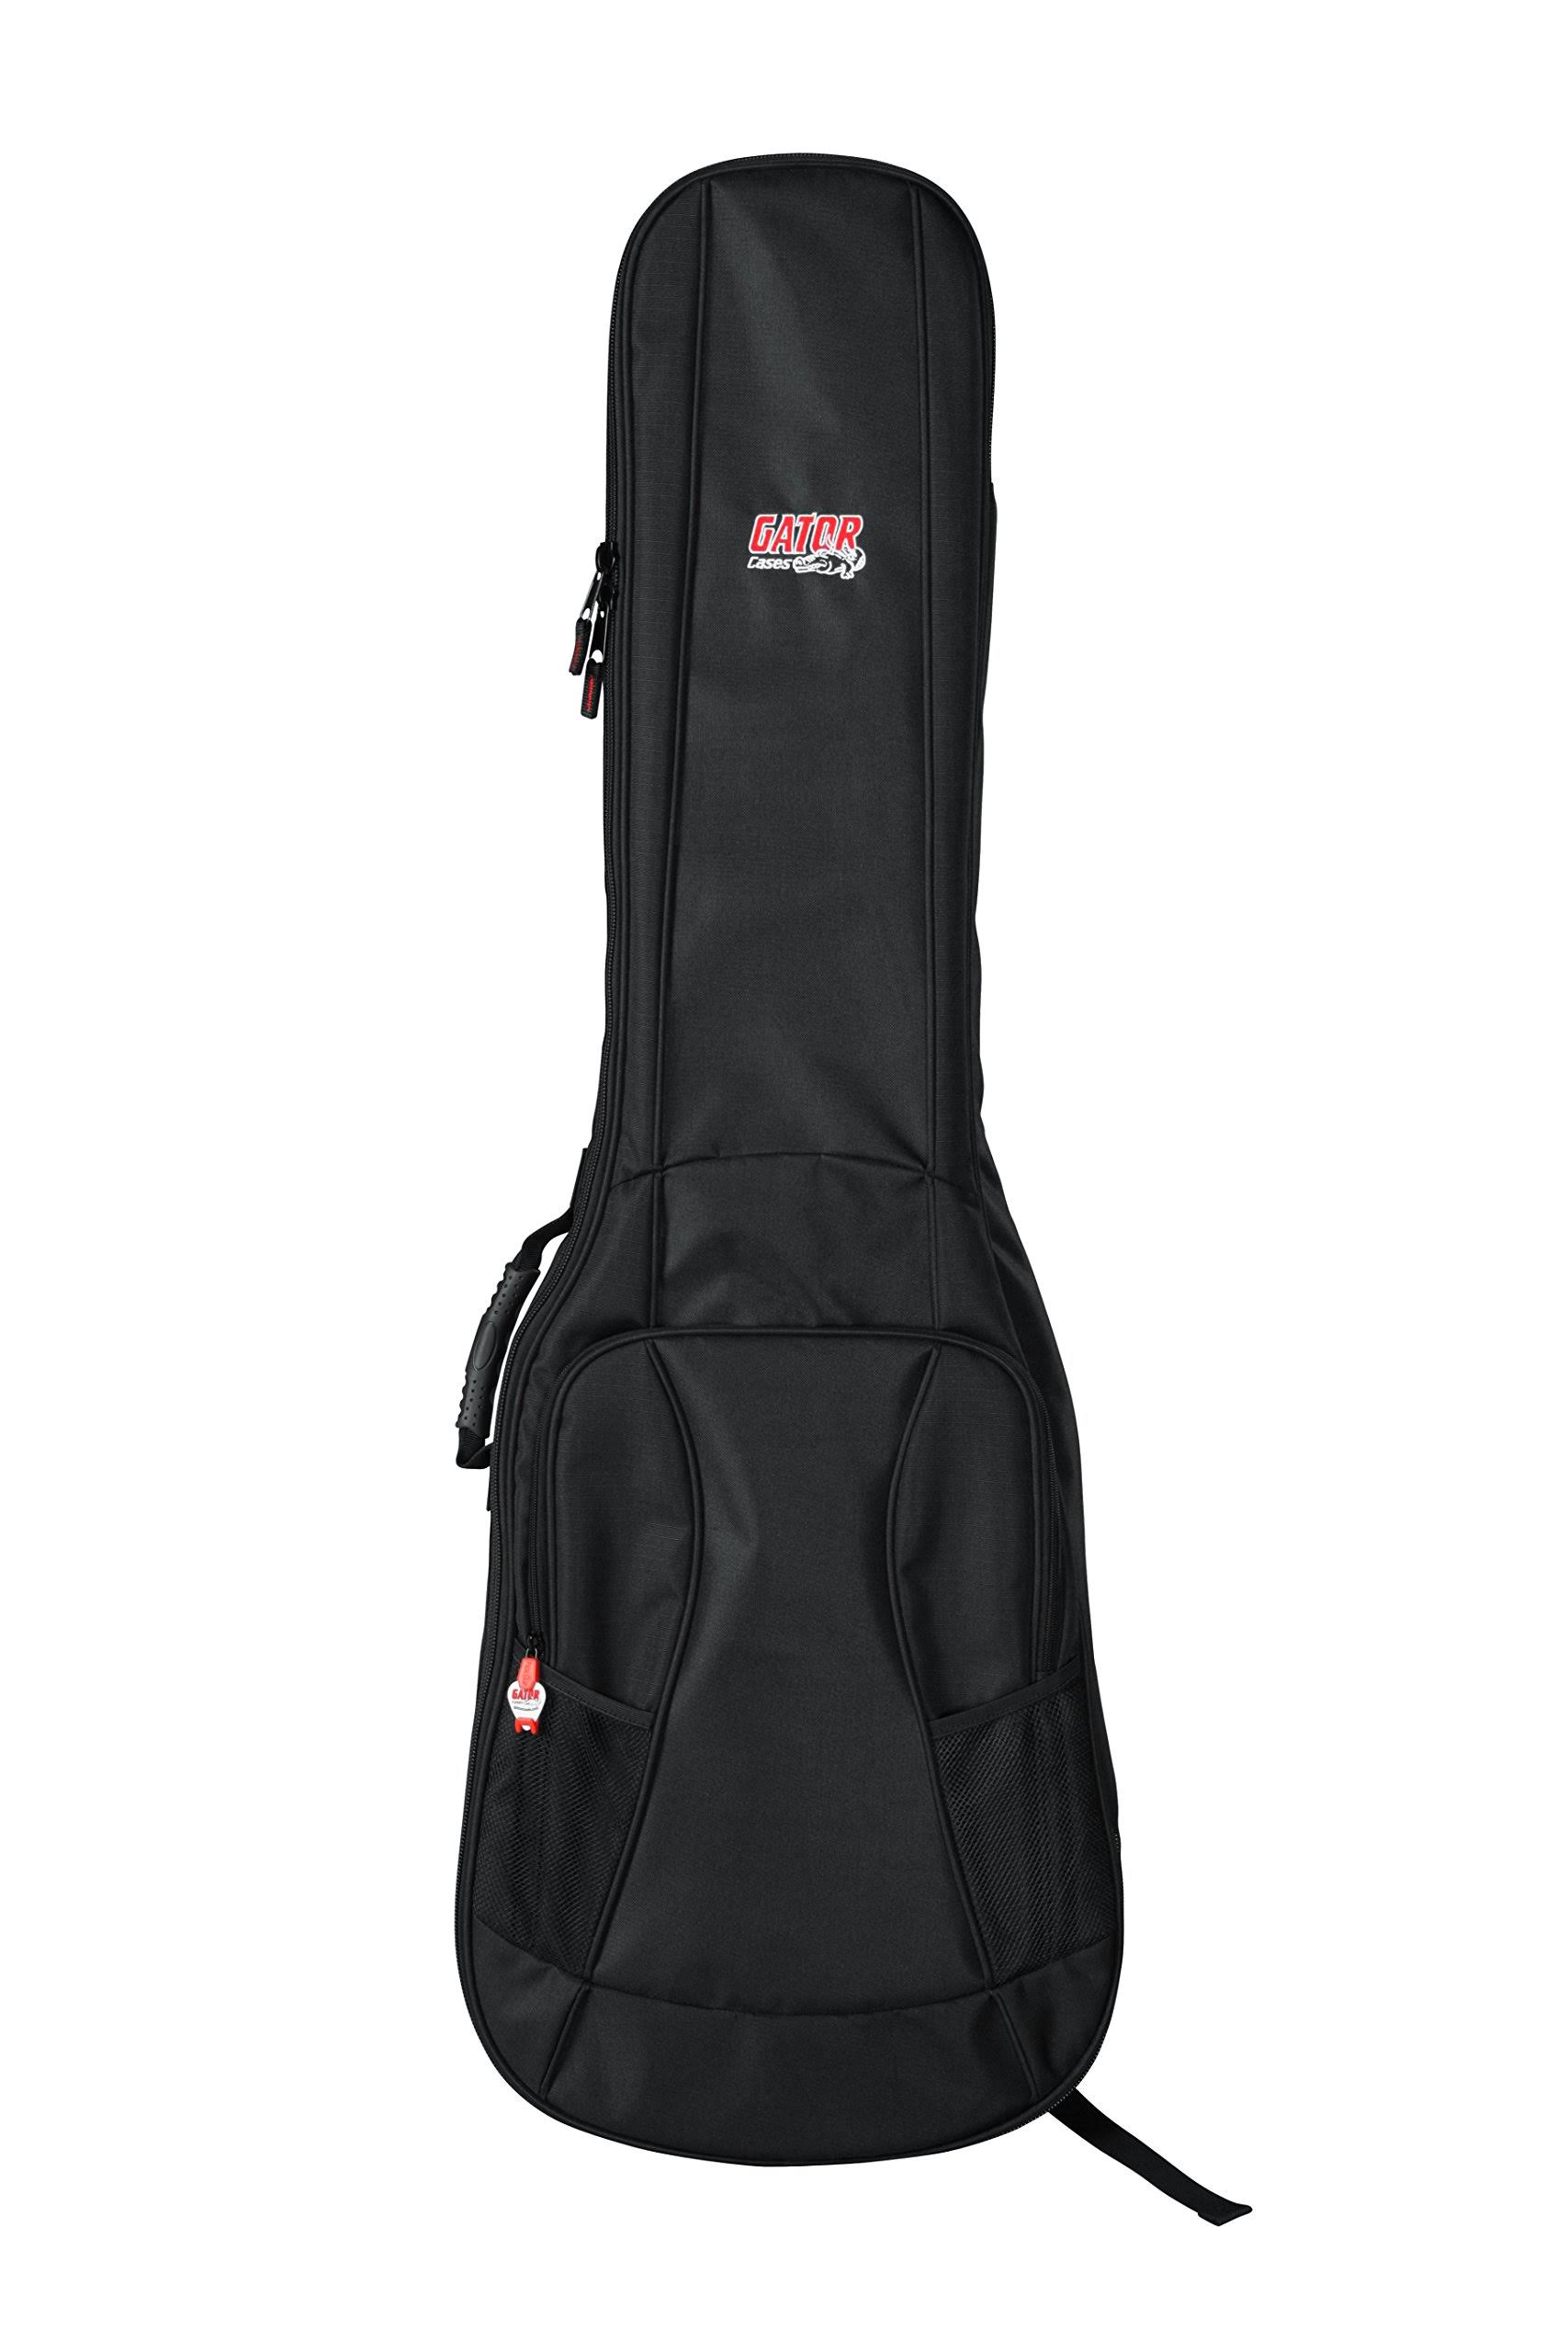 Gator Cases 4G Series Gig Bag for Bass Guitars